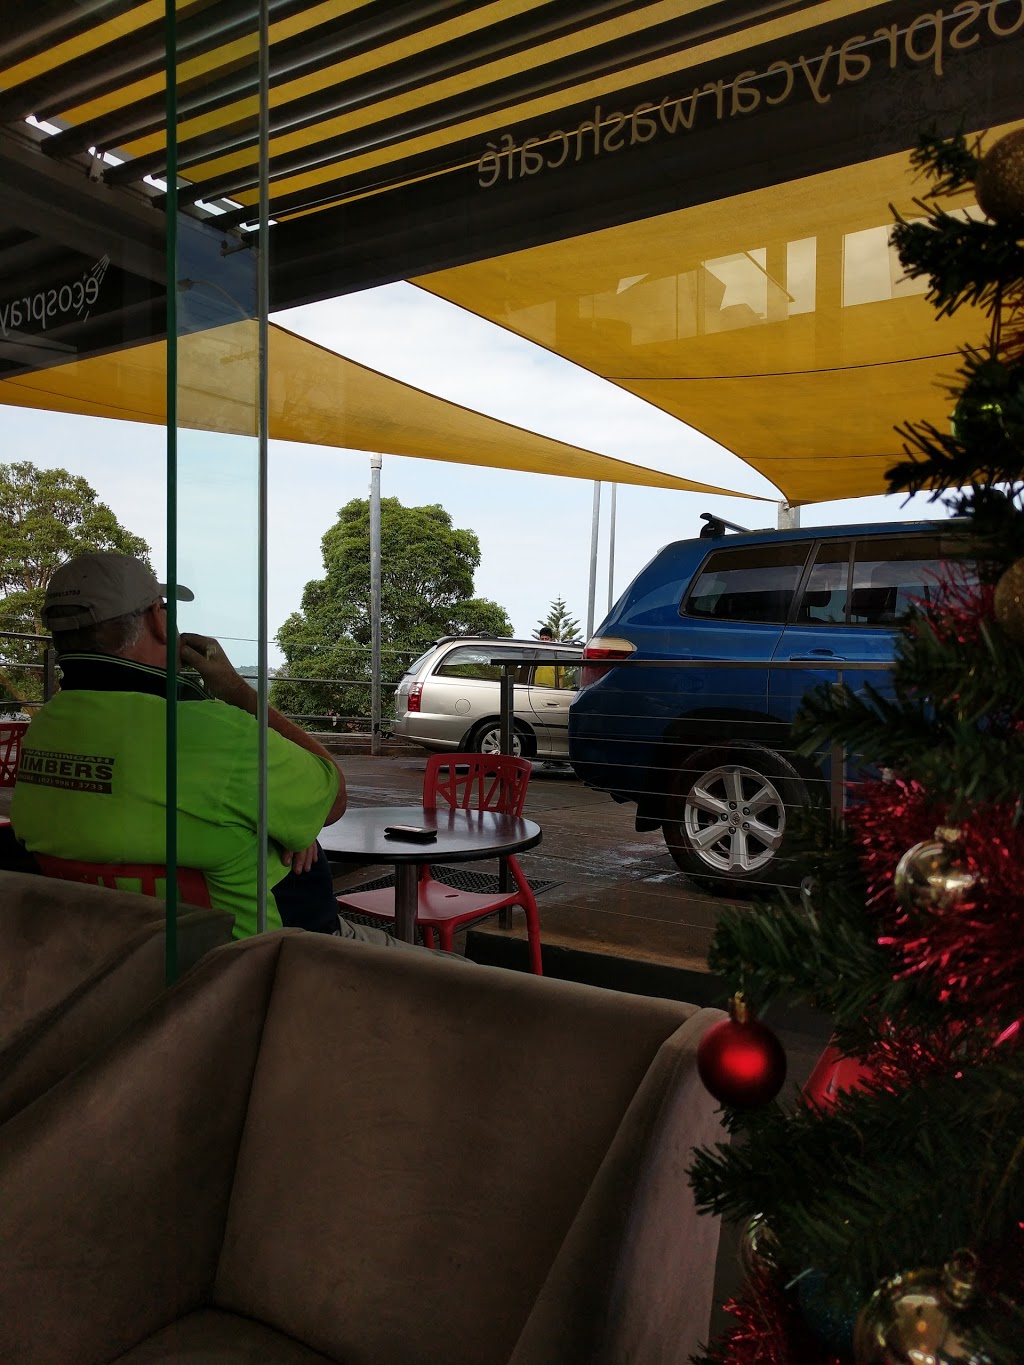 Ecospray Car Wash Cafe | car wash | 214-224 Warringah Rd, Beacon Hill NSW 2100, Australia | 0294516653 OR +61 2 9451 6653